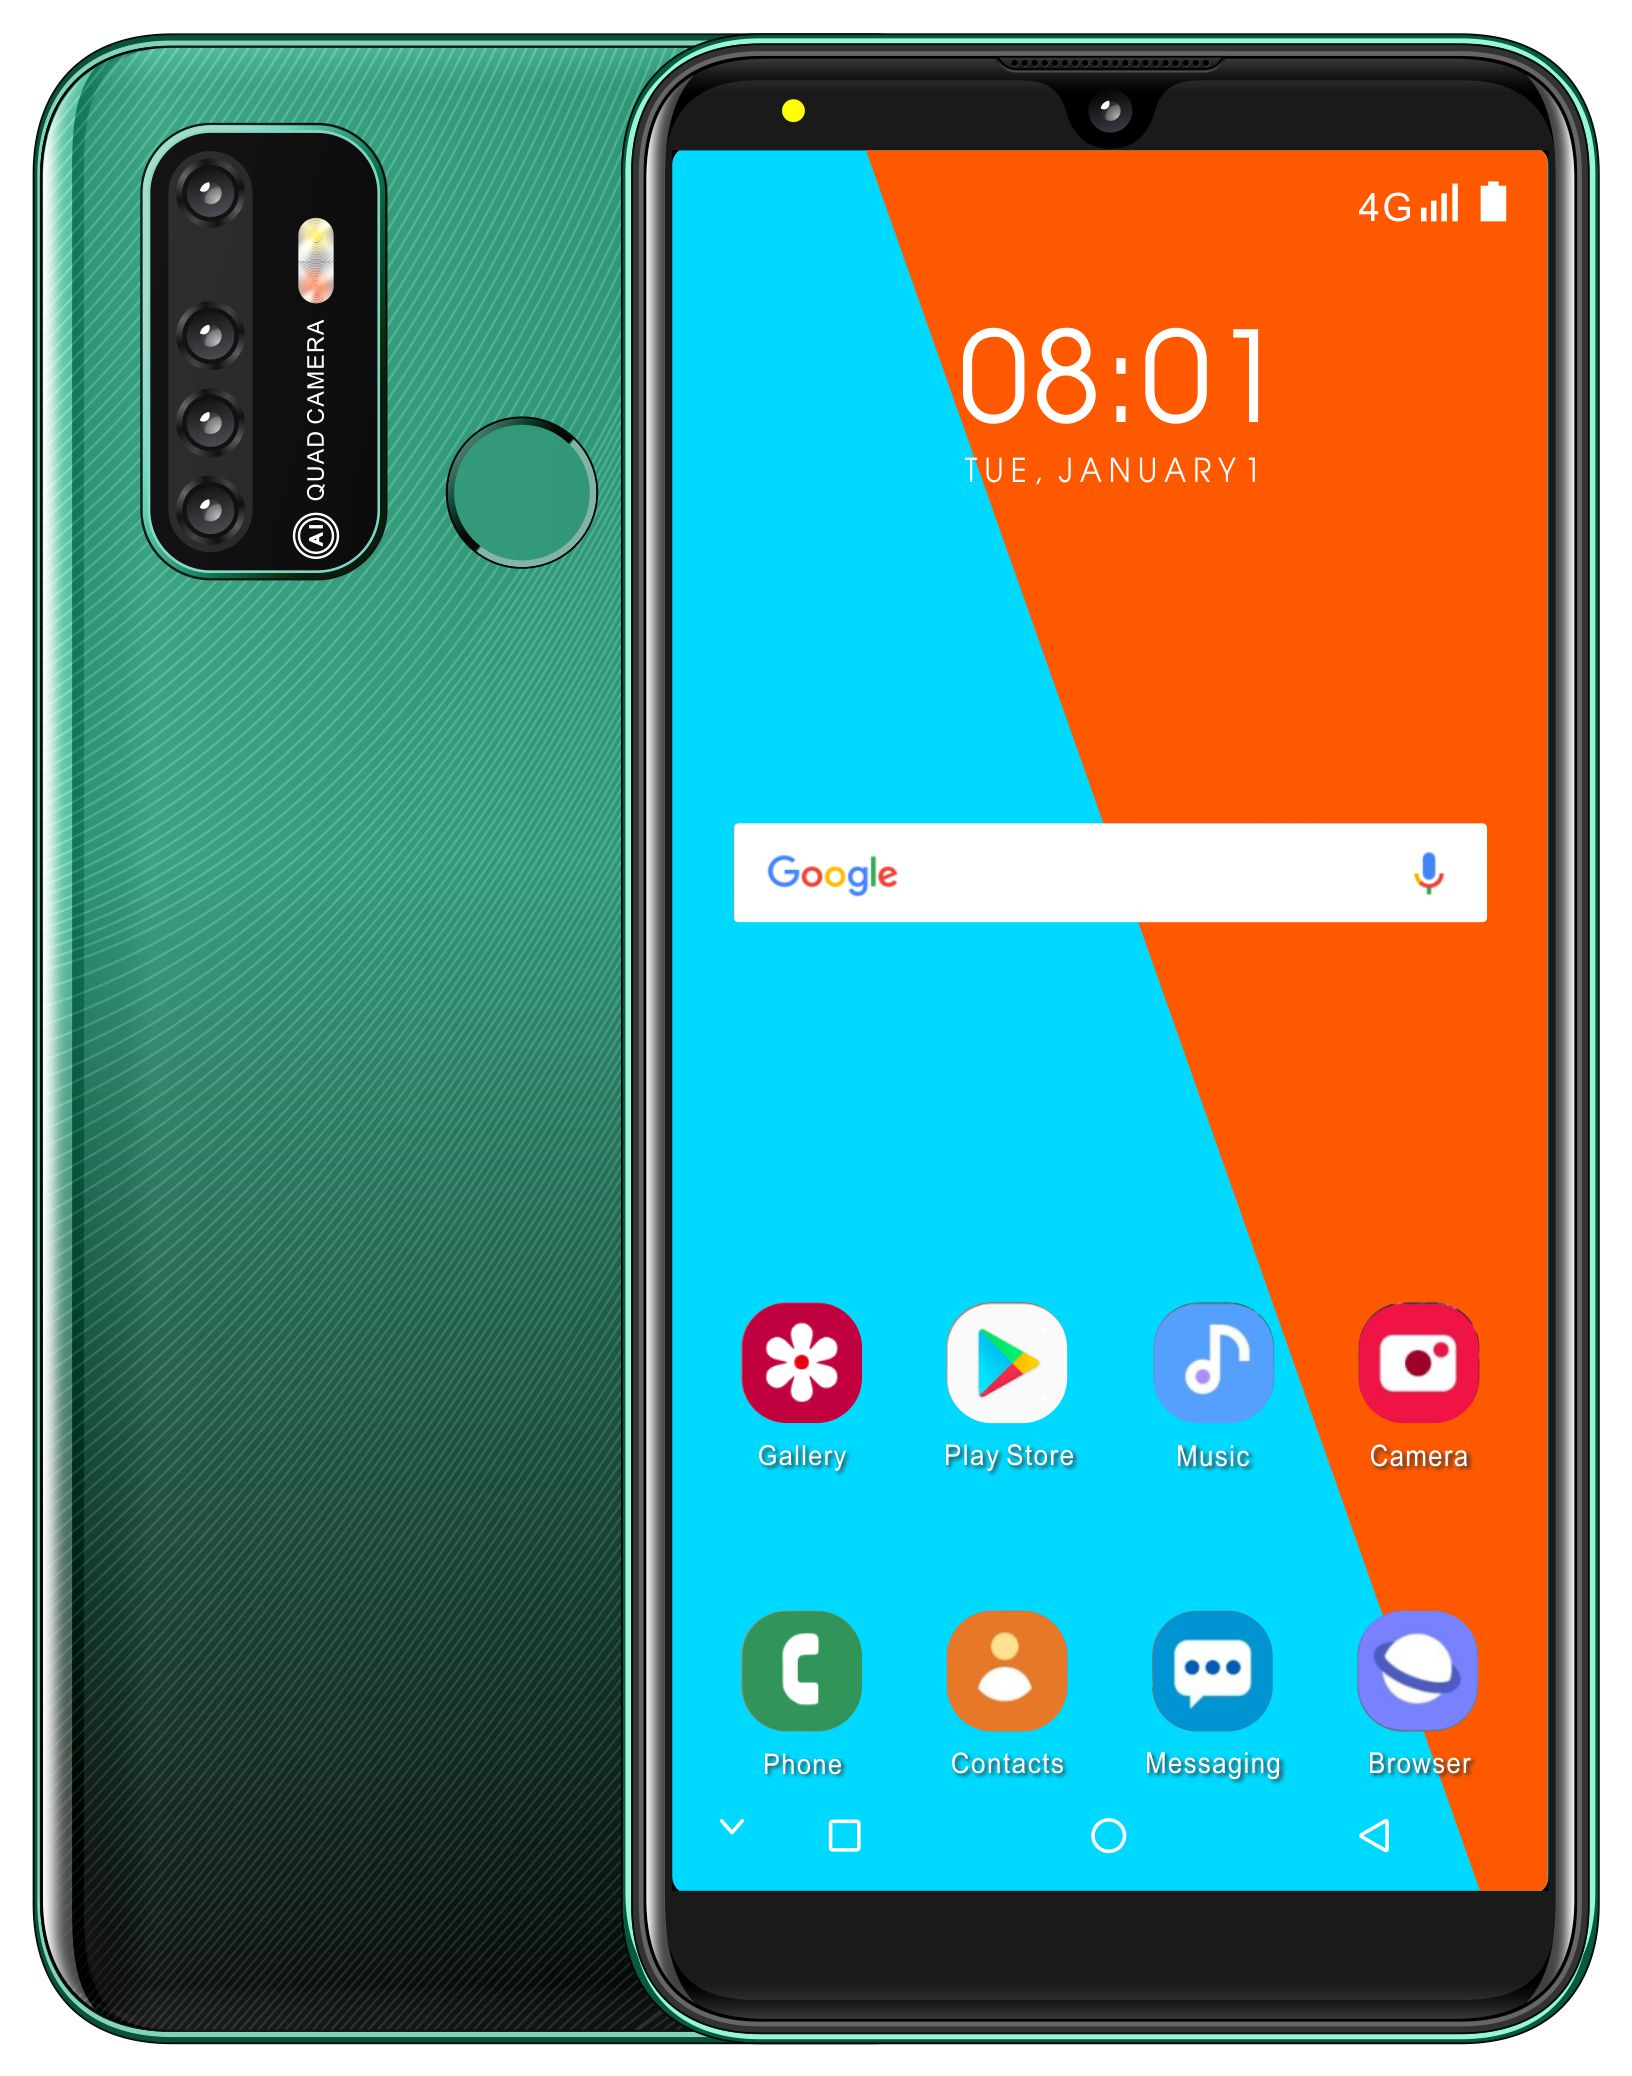 oqqo A92 Android สมาร์ทโฟนหน่วยความจำ 4G+64G จอ 6.5นิ้ว HD เต็มหน้าจอ ปลดล็อคลายนิ้วมือ แบตเตอรี่ 4800 mAh ถ่ายภาพ ชมภาพยนต์ ฟังเพลง รับประกัน